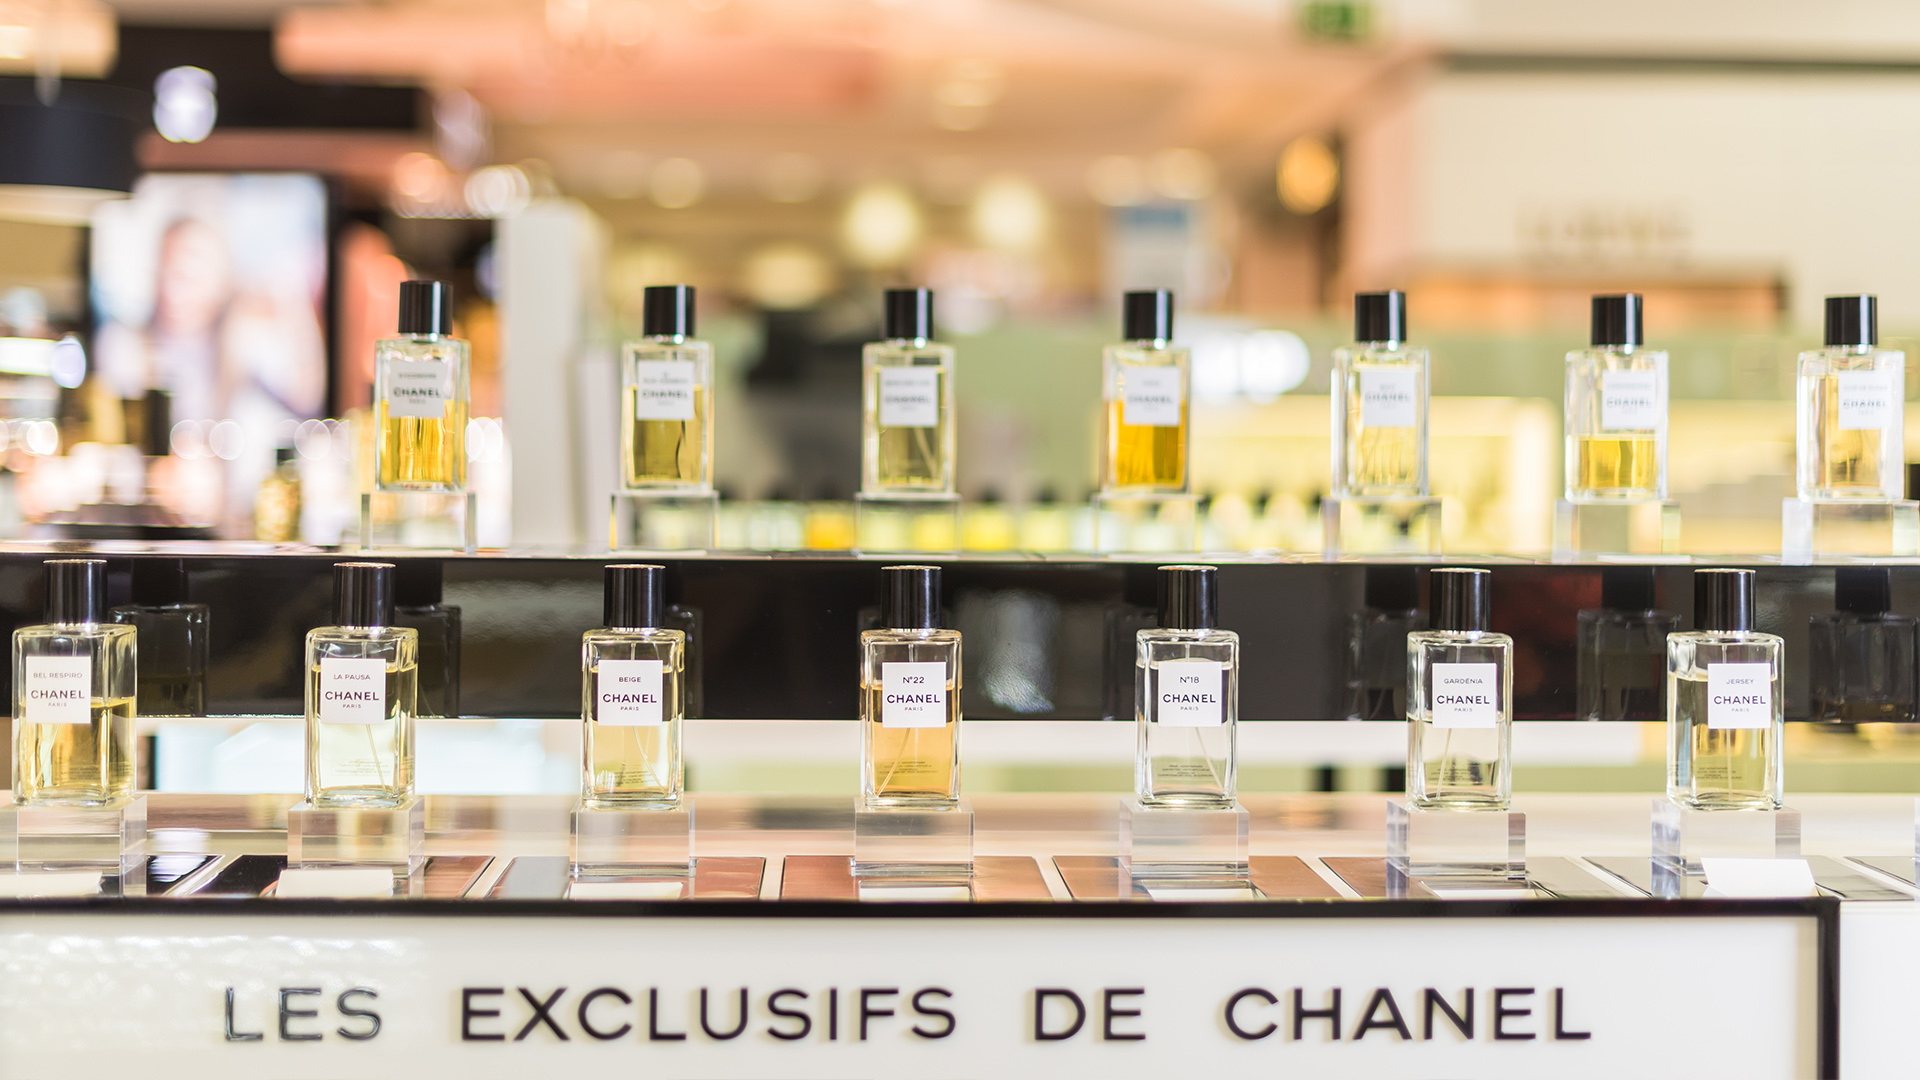 El Corte Inglés Castellana Perfume Chanel Madrid